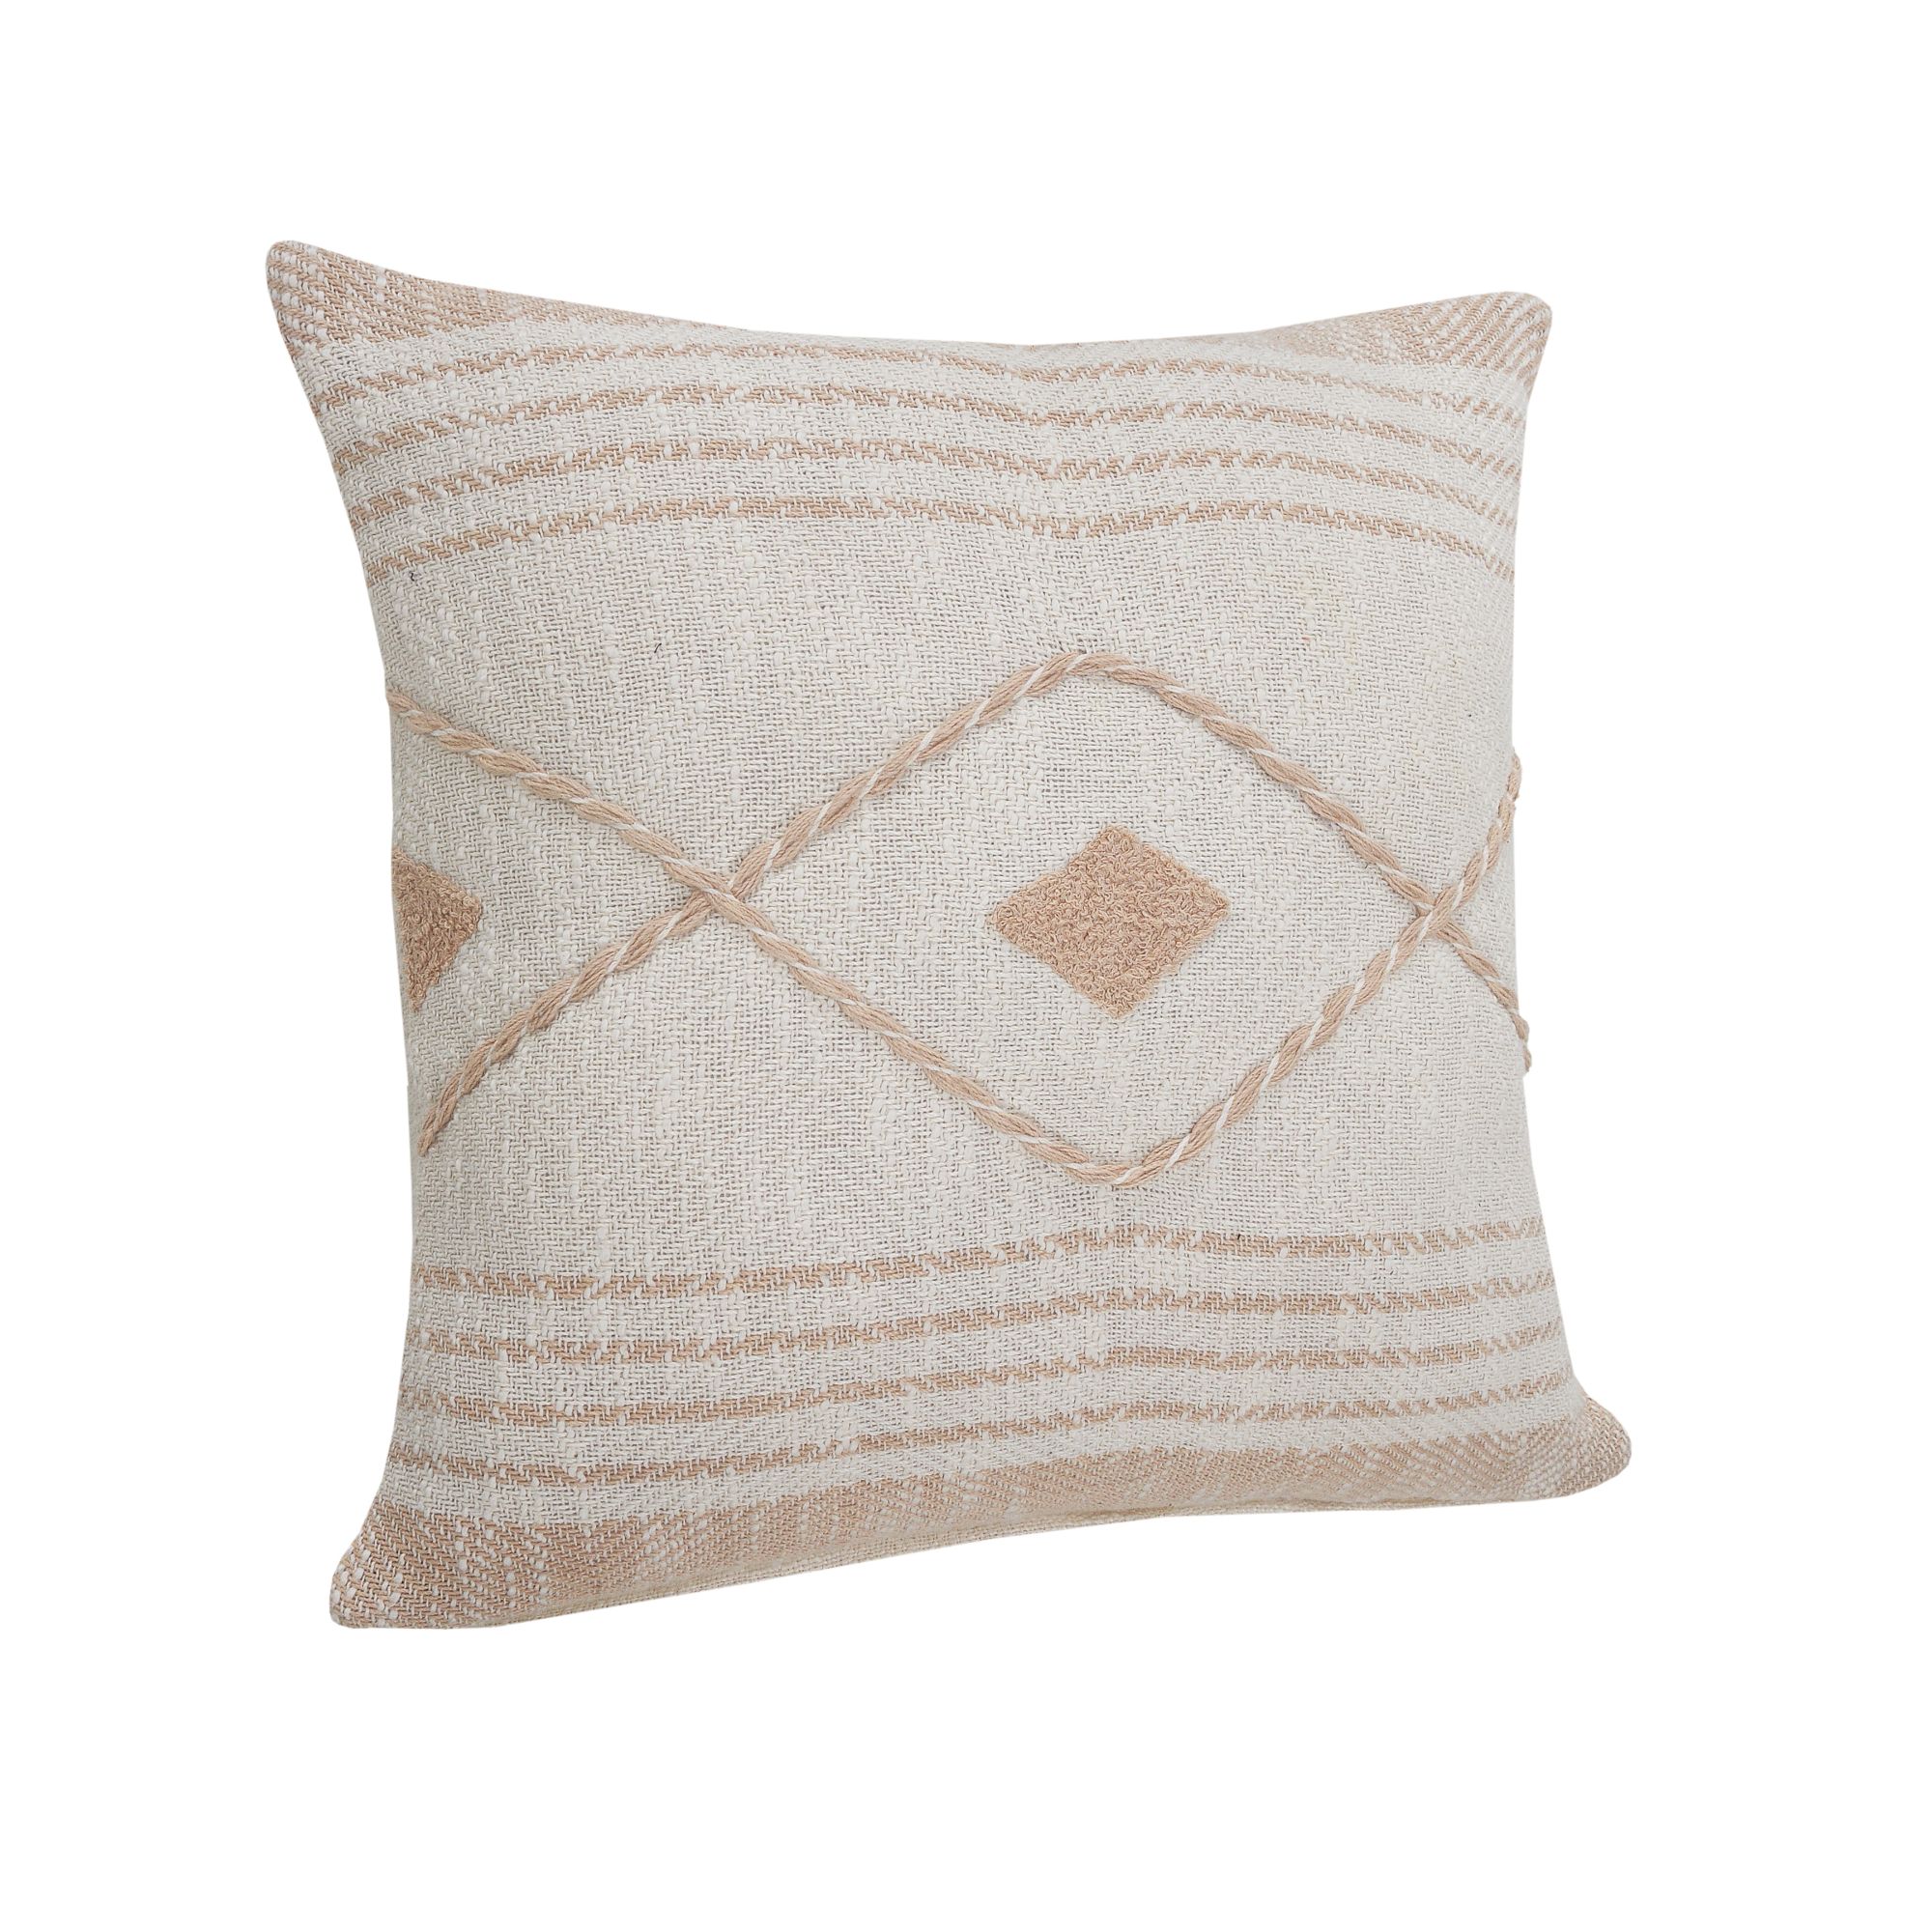 Laddha Home Designs 20" Tan and White Geometric Diamond Square Throw Pillow